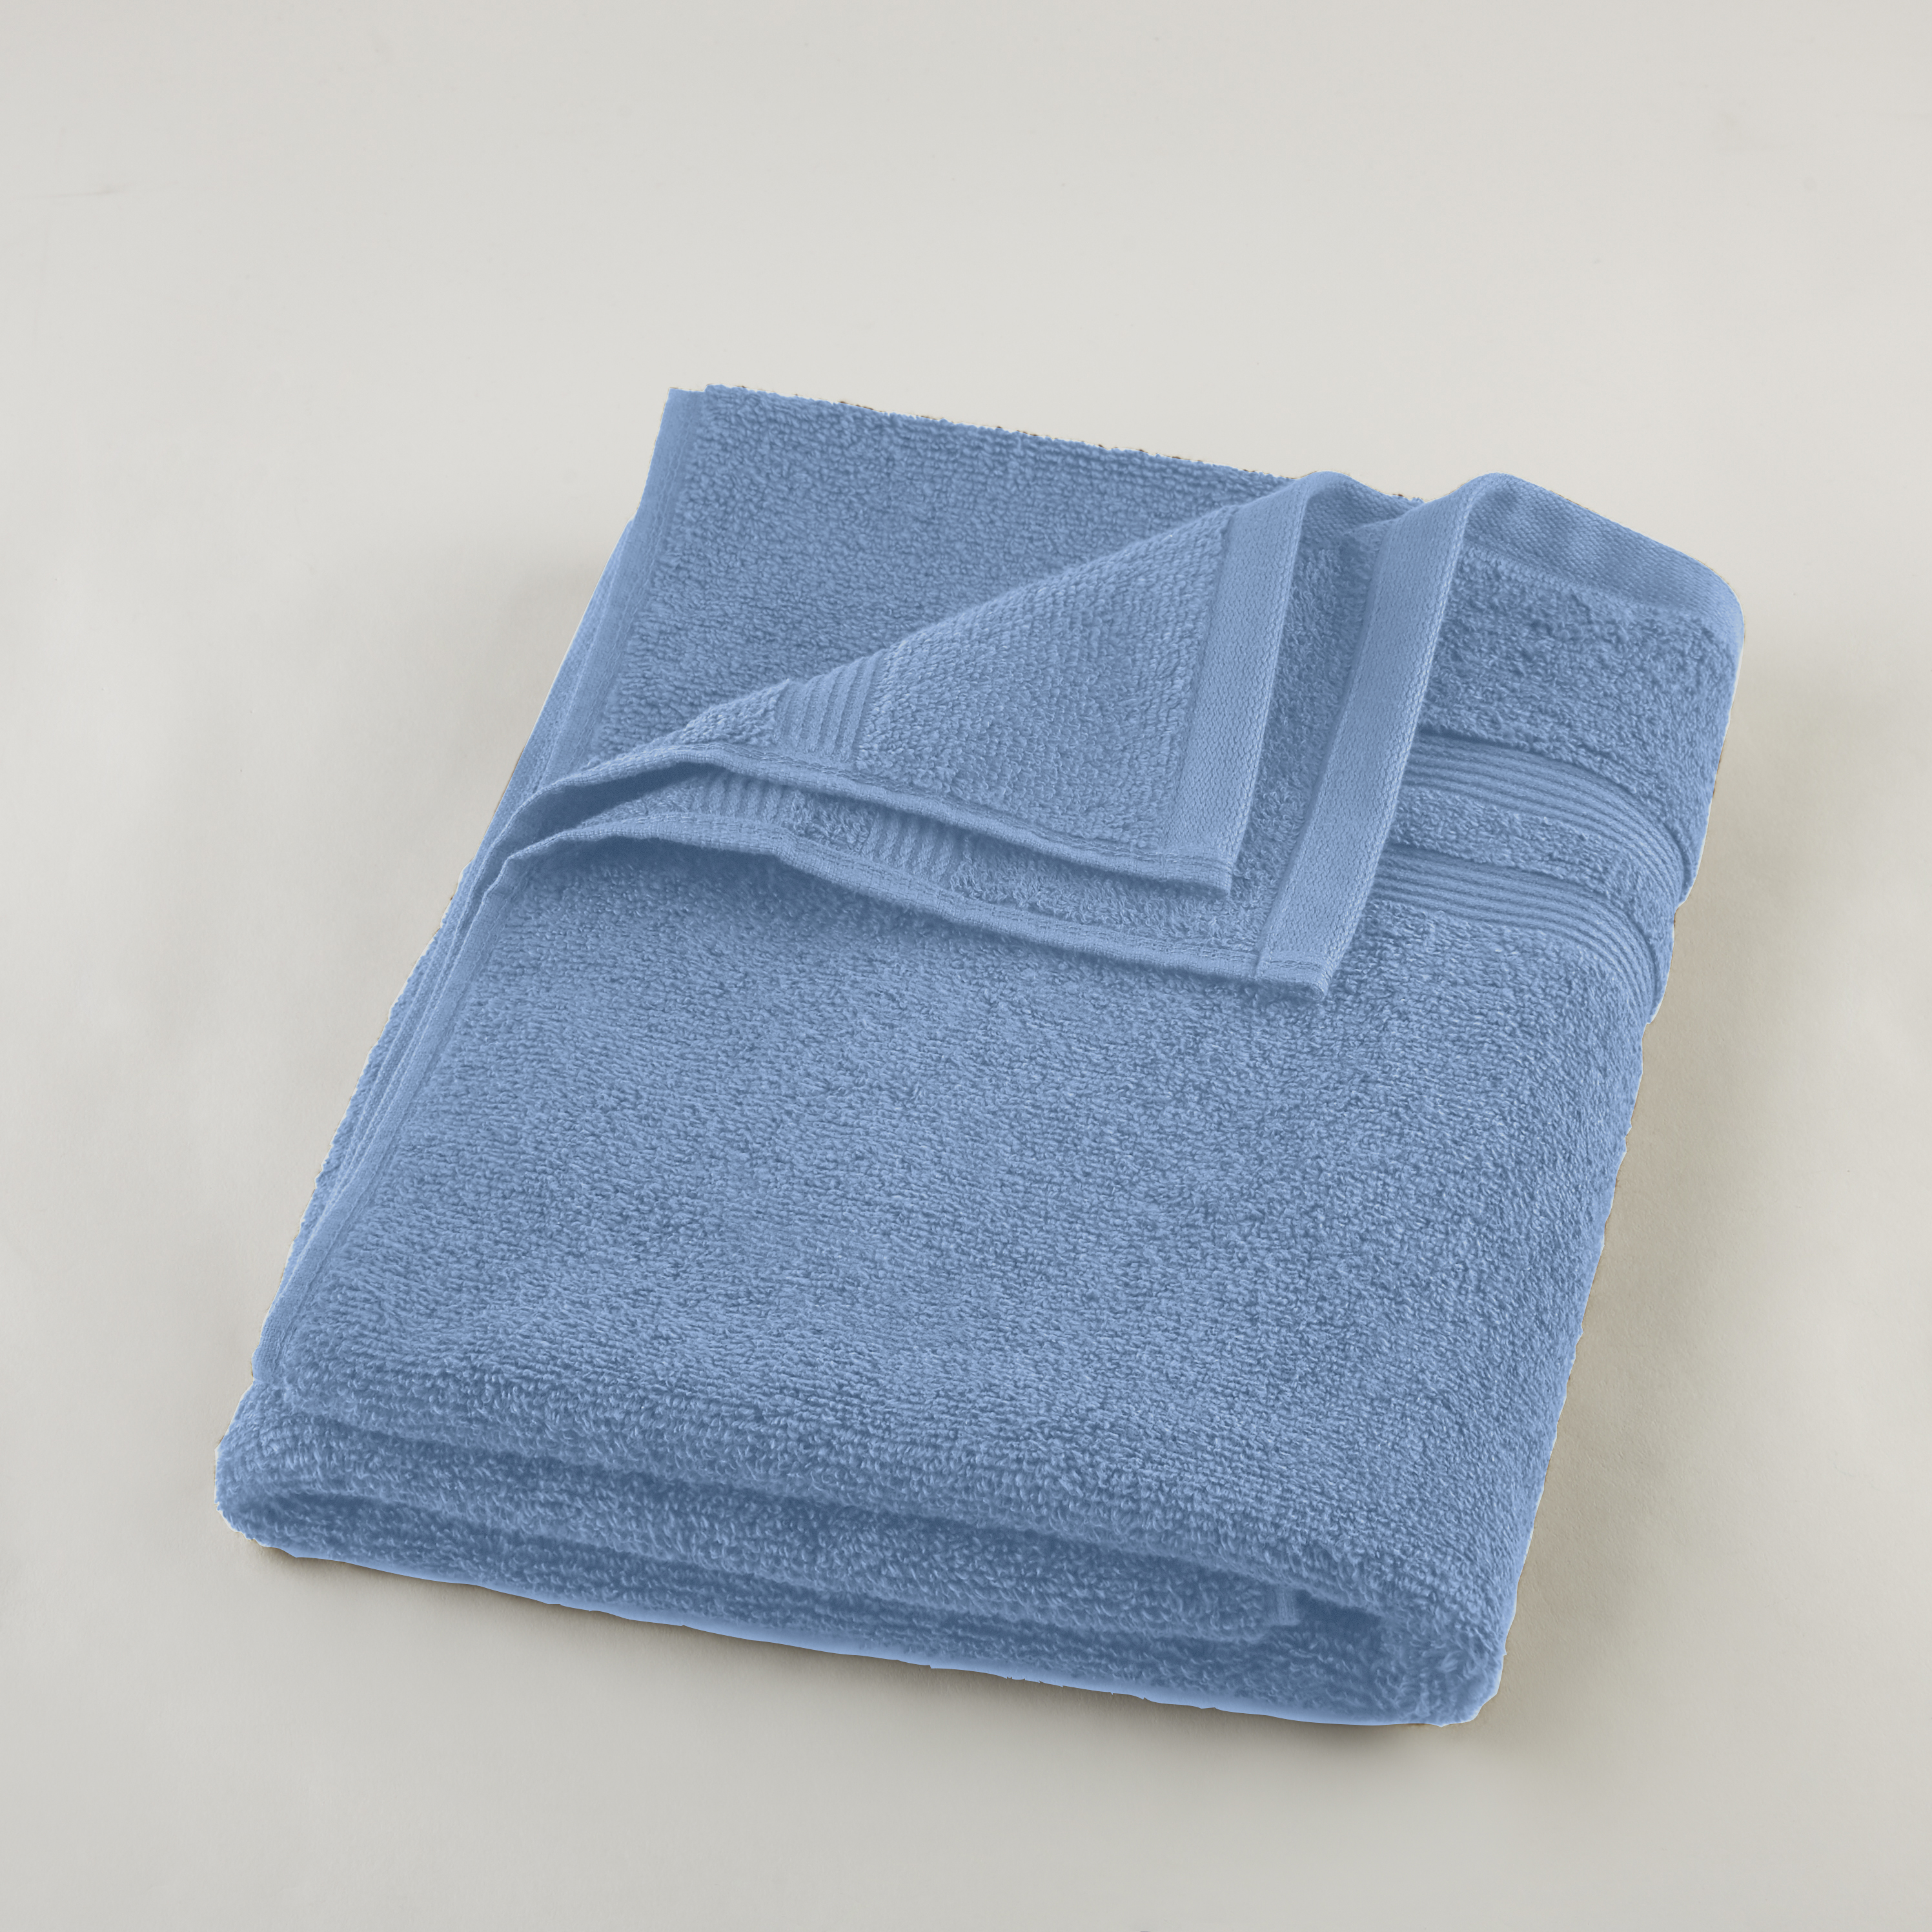 Mainstays Performance 6-Piece Towel Set, Solid Blue Linen - image 4 of 4